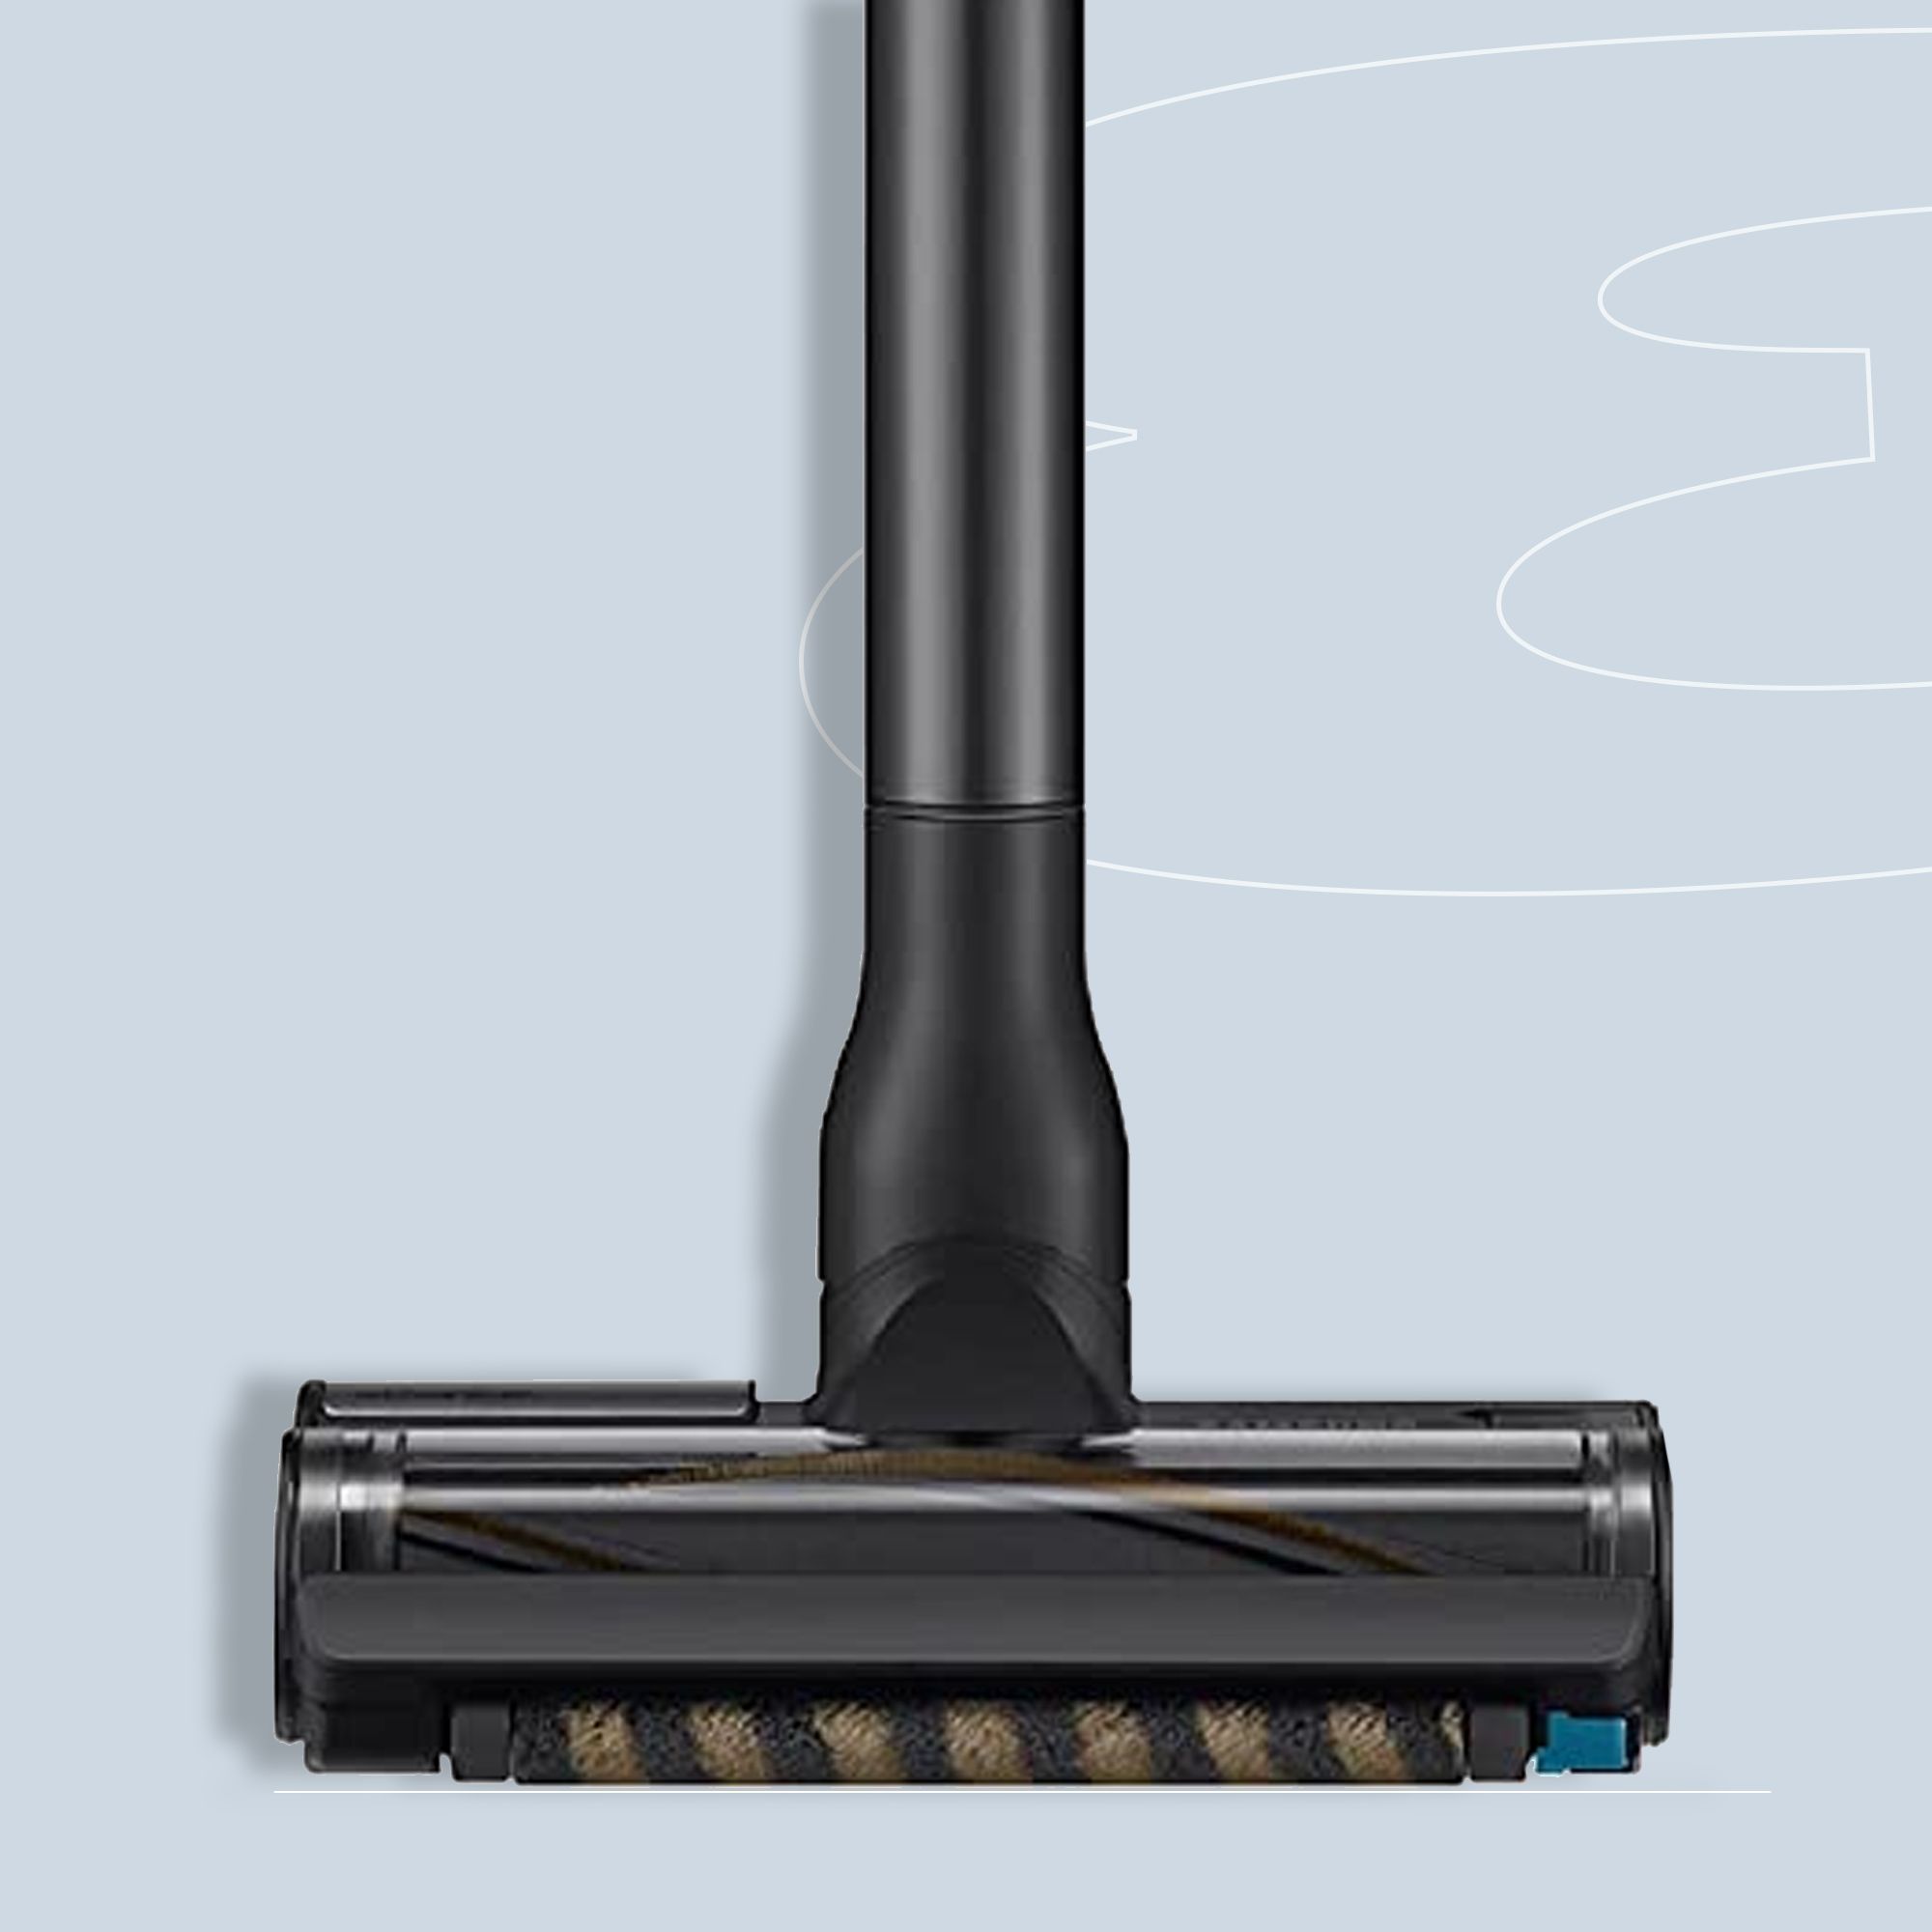 Samsung's Best Cordless Vacuum Is $450 Off This Week